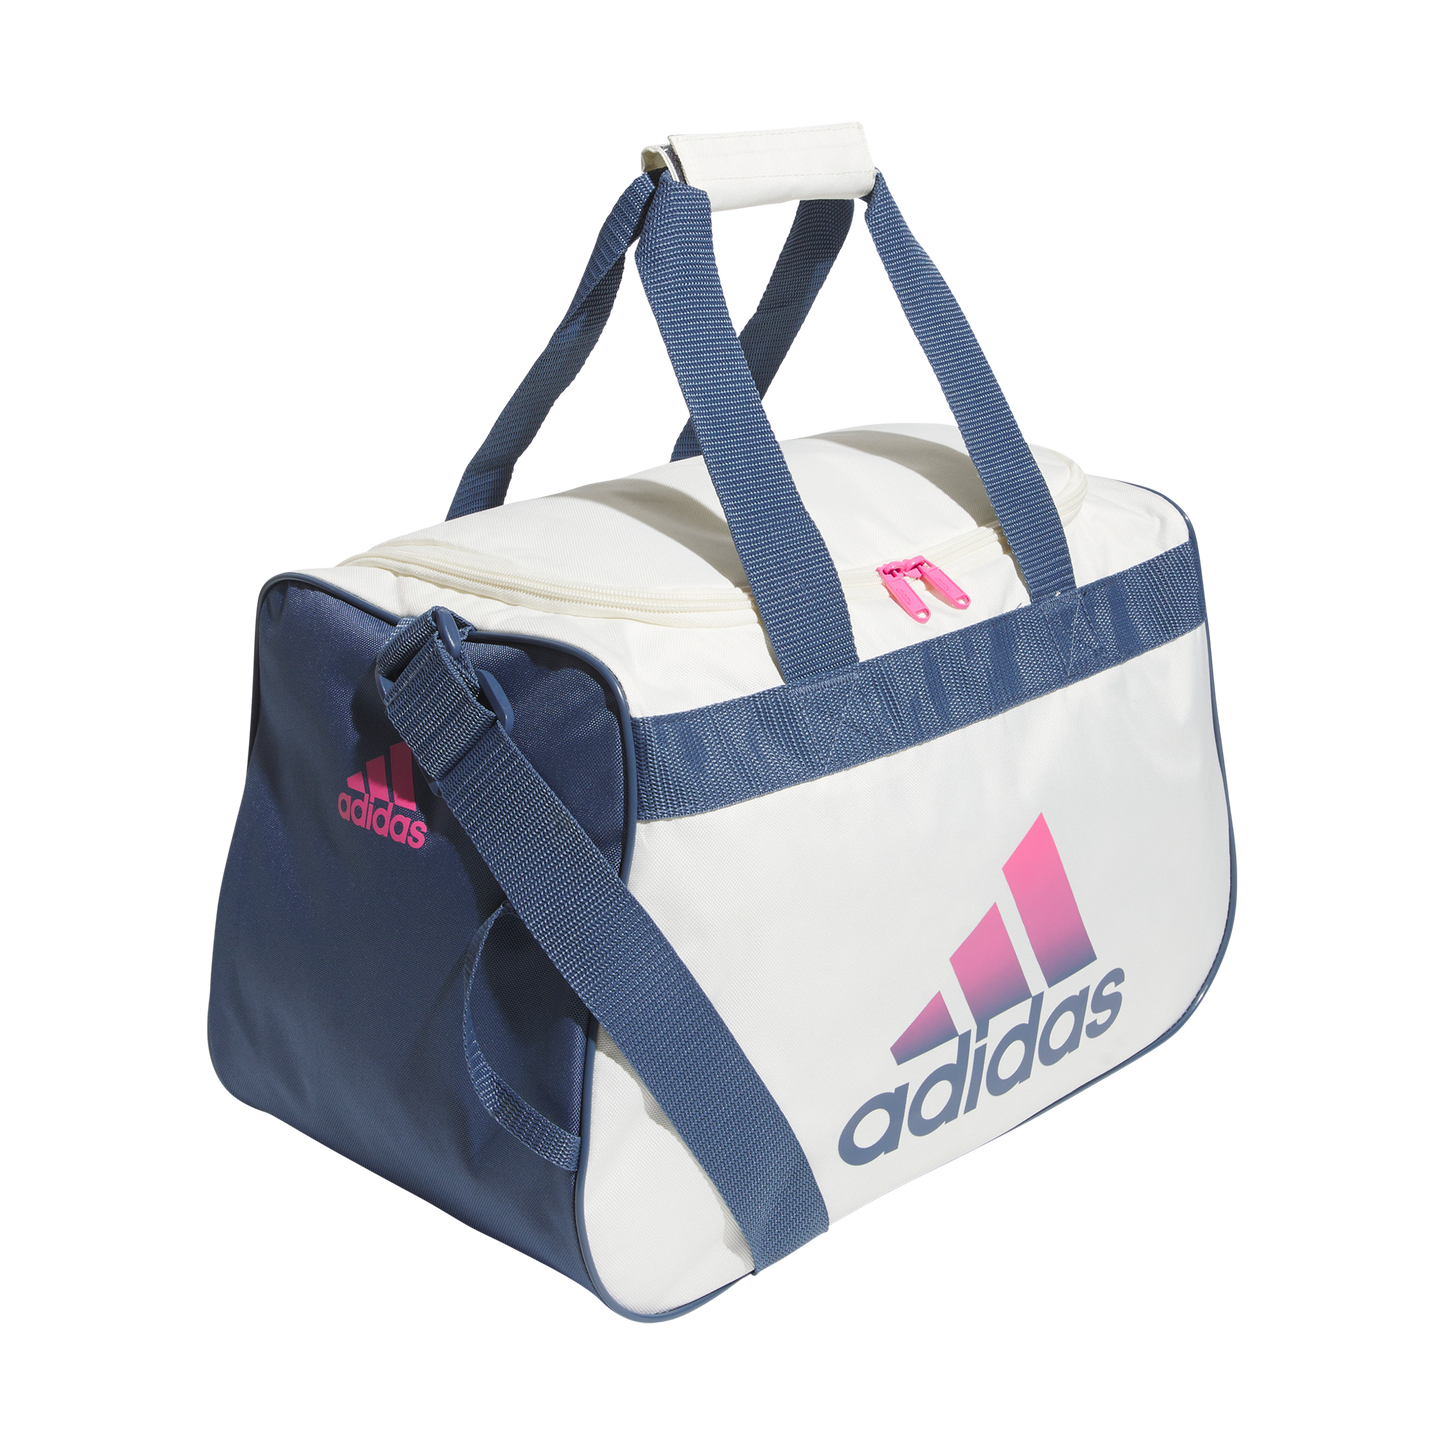 Adidas Diablo Small Duffle Bag